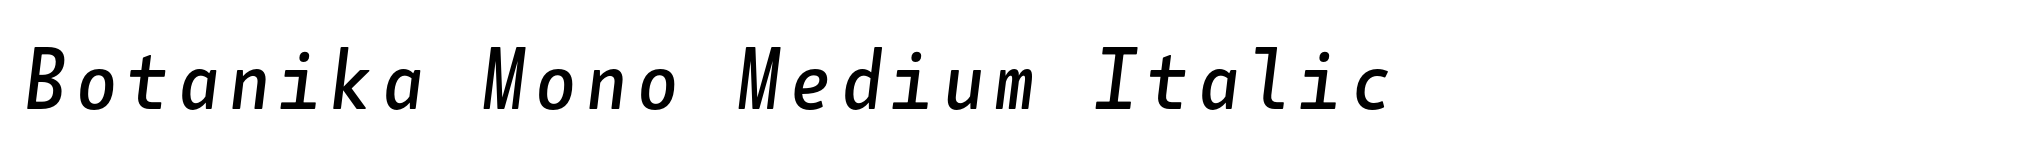 Botanika Mono Medium Italic image